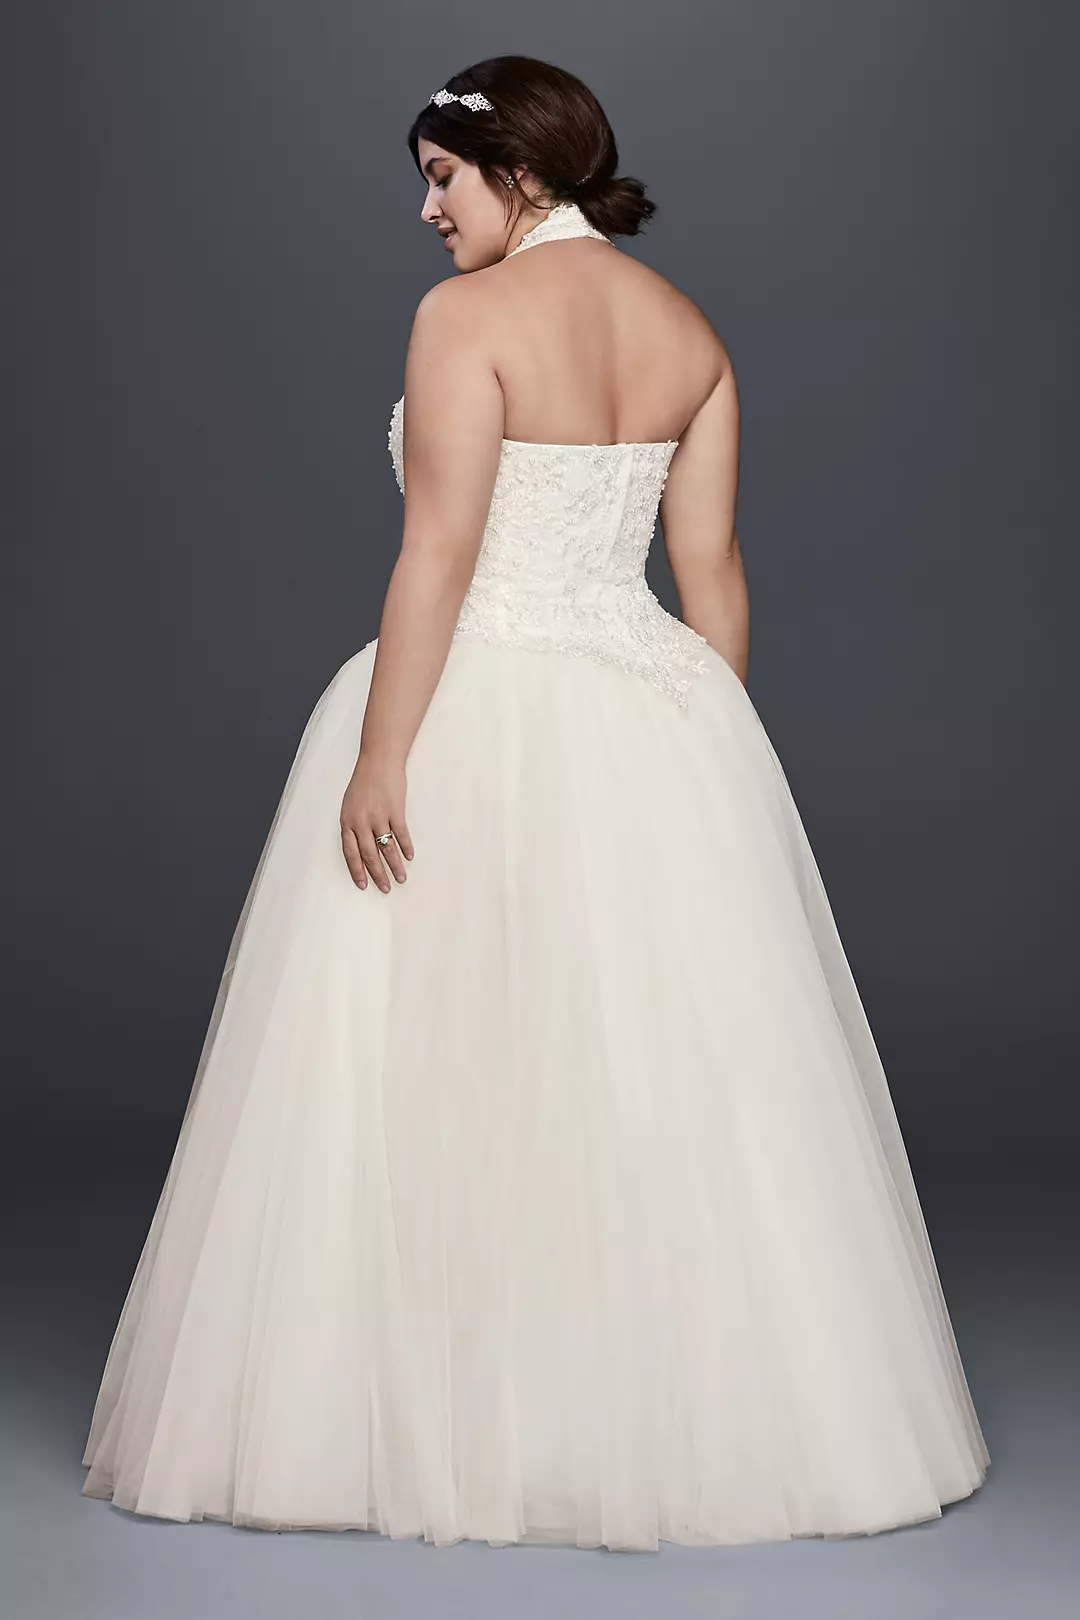 Basque Waist Plus Size Ball Gown Wedding Dress Image 2